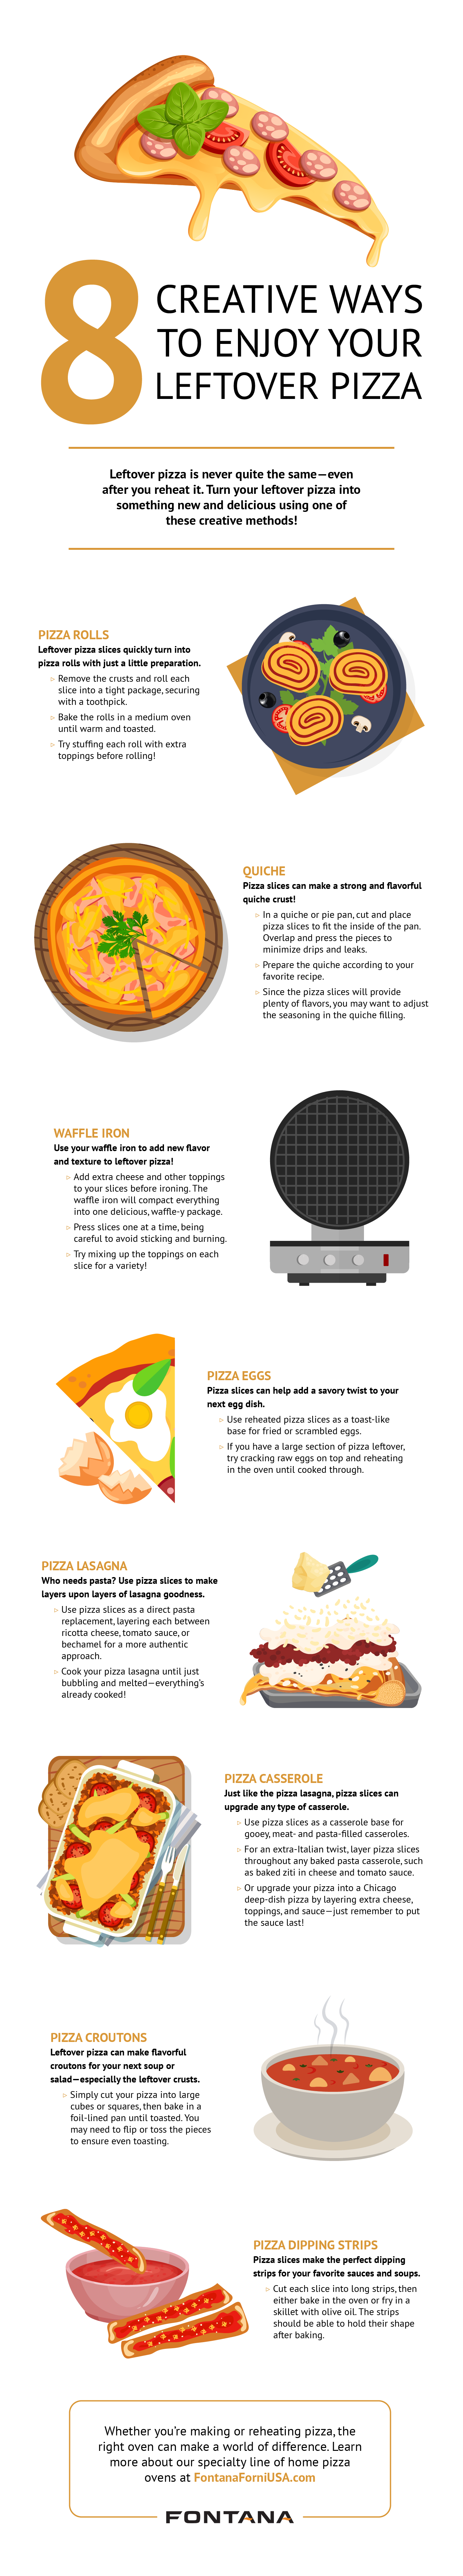 8 Creative Ways to Enjoy Leftover Pizza